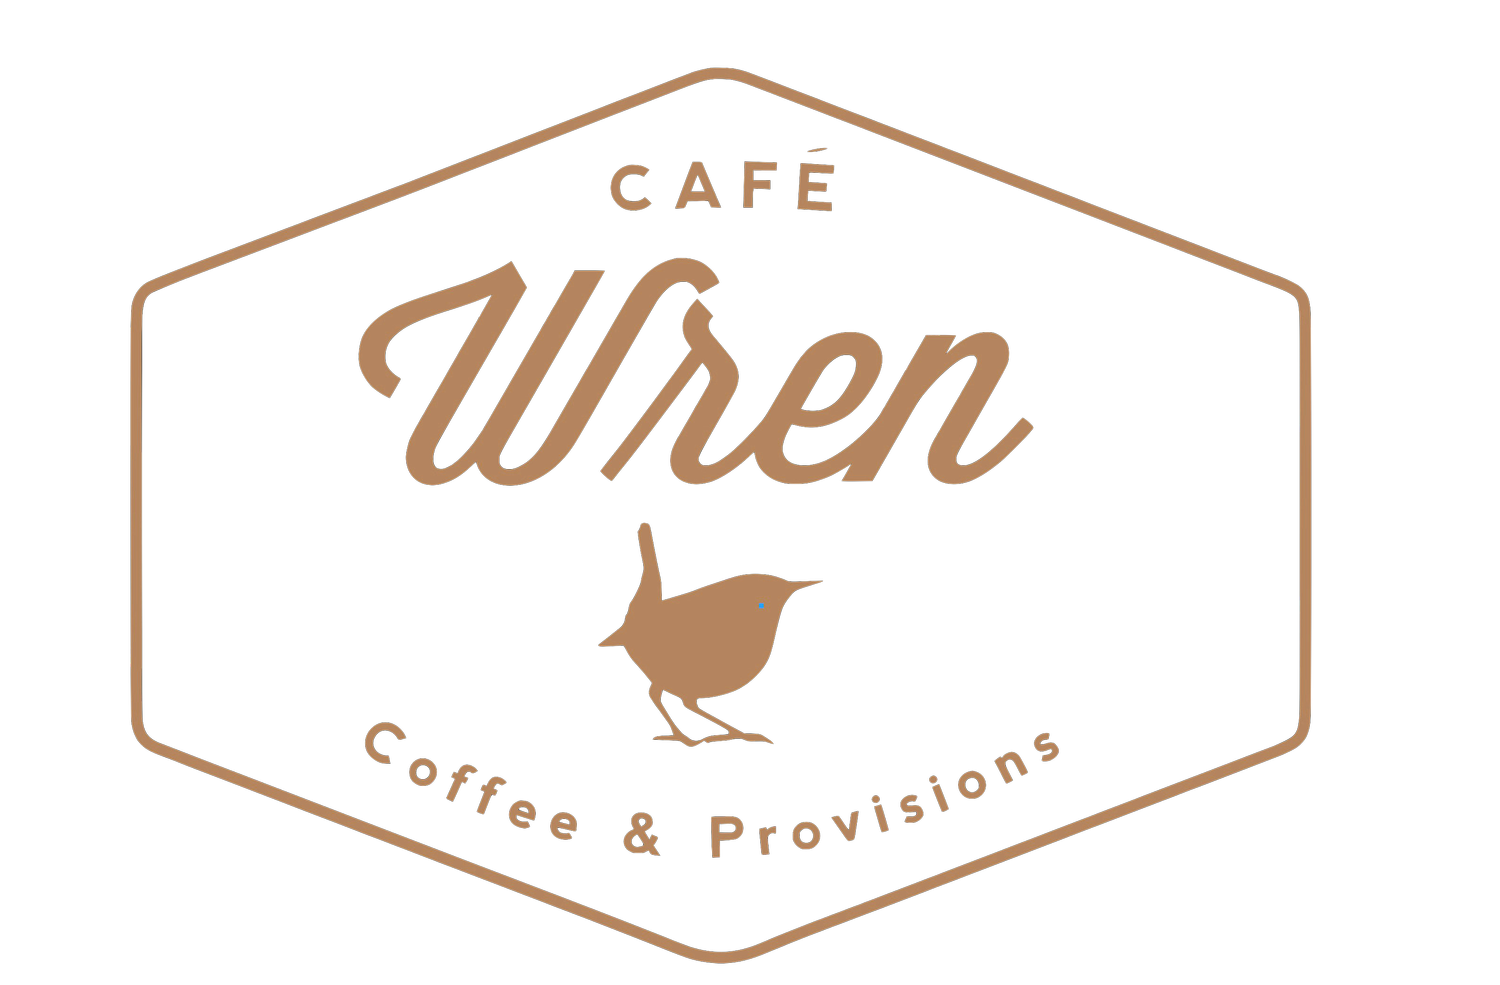 Café Wren